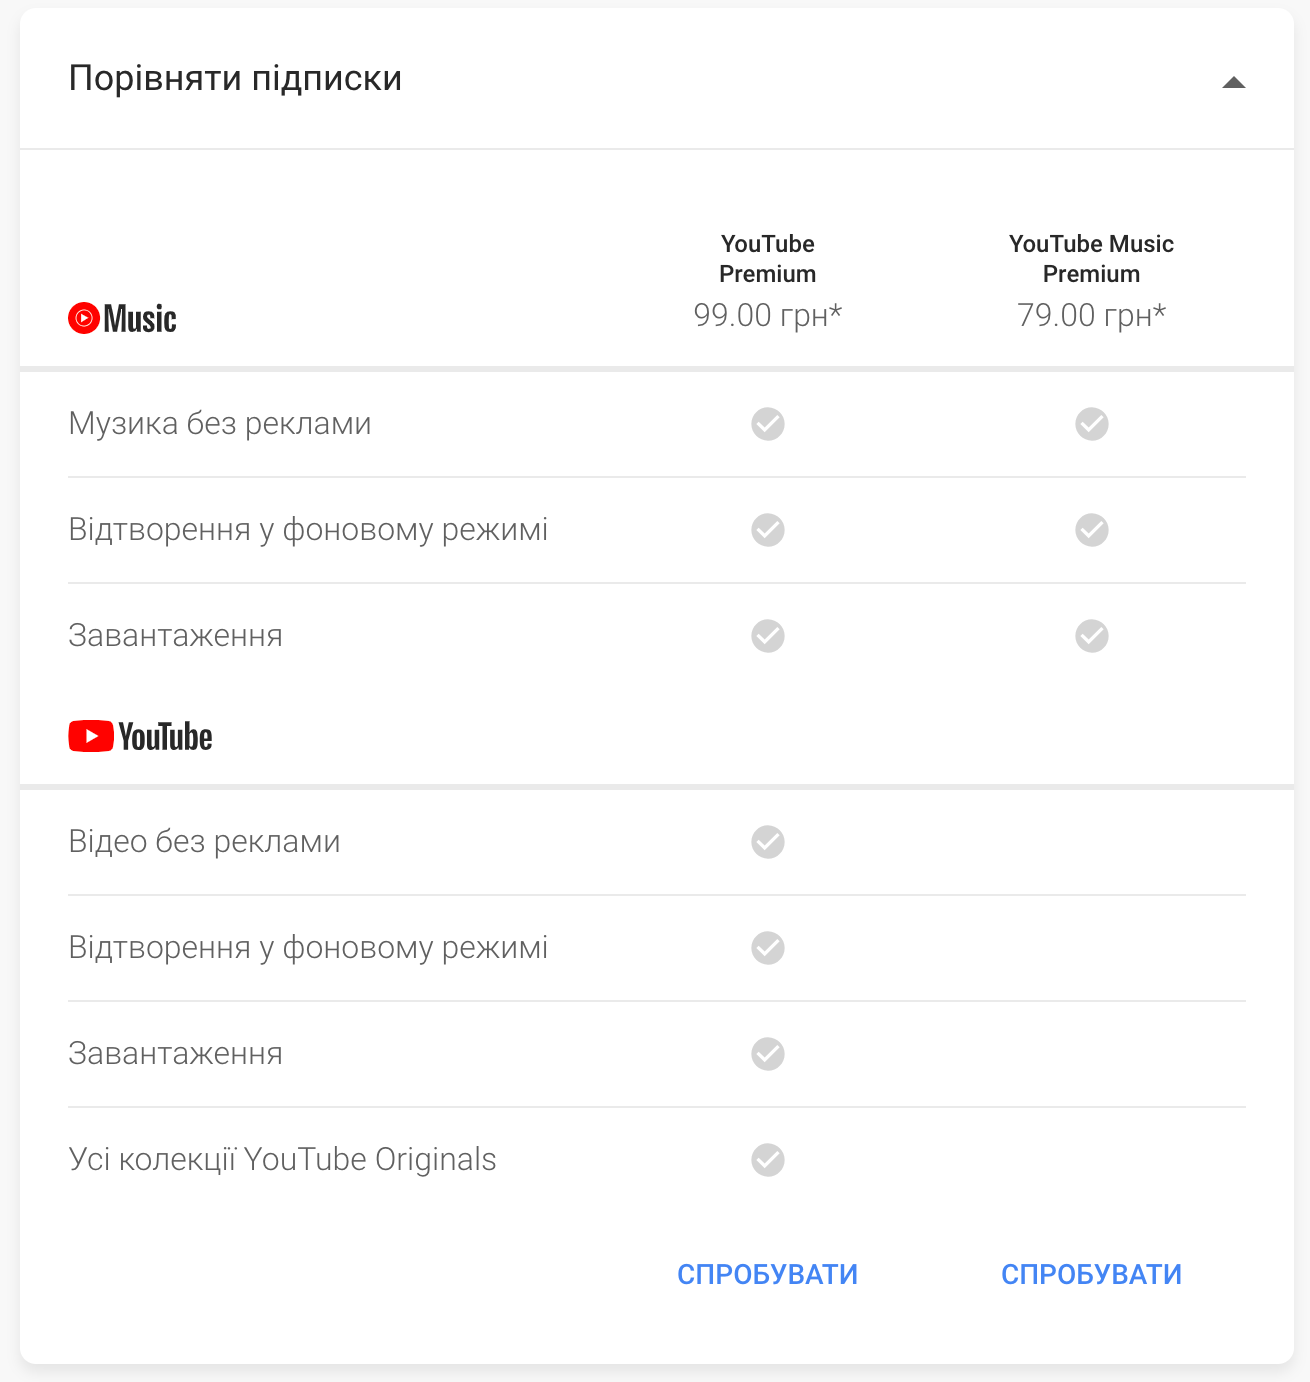 YouTube Premium / YouTube Music Premium